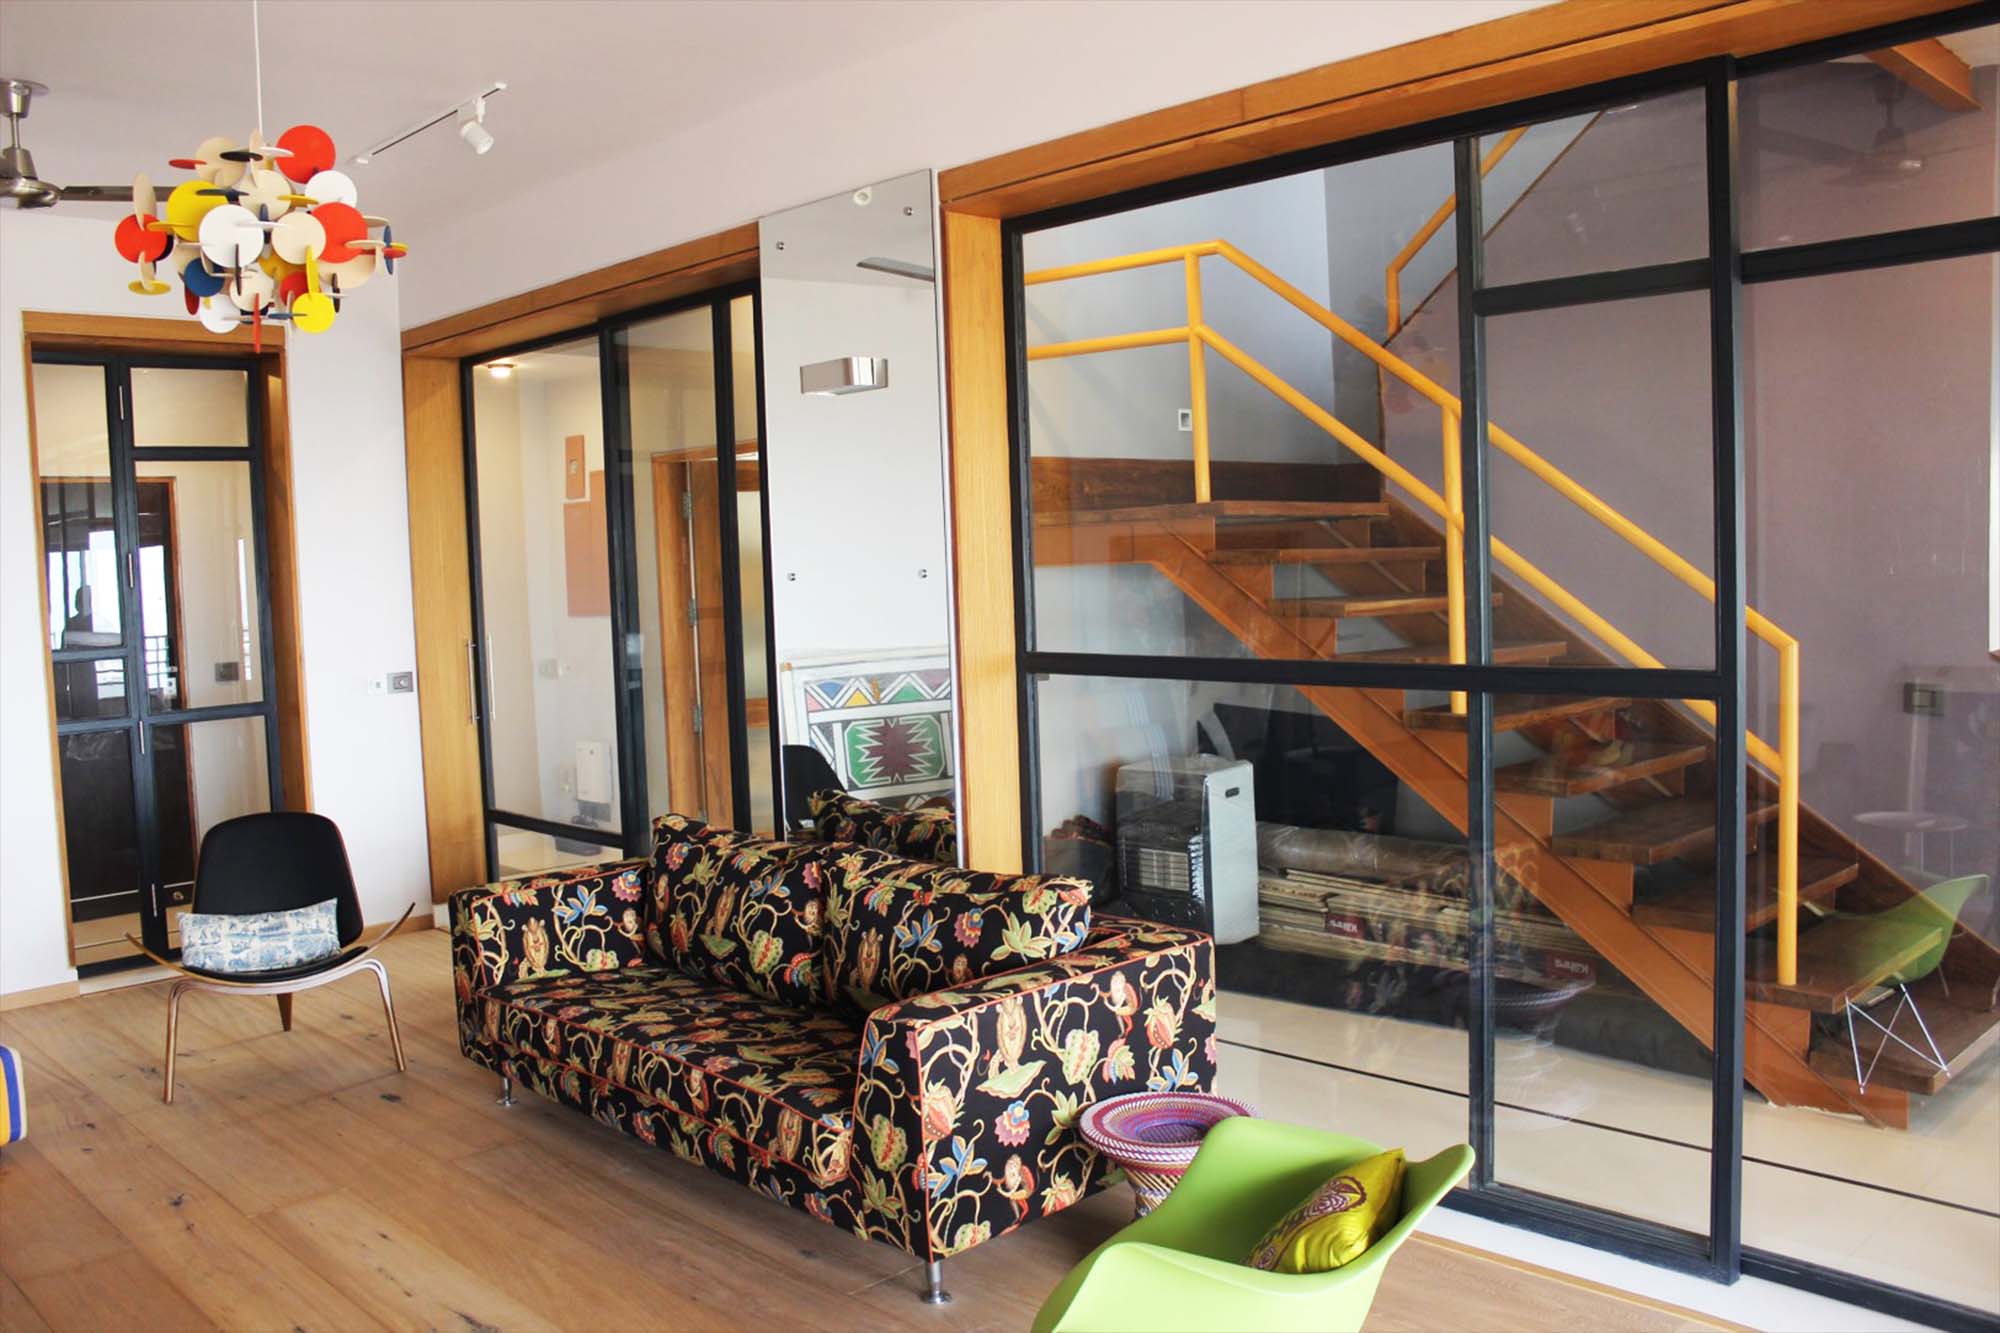 Uniifyy transforms duplex apartment into a living Mondrian masterpiece